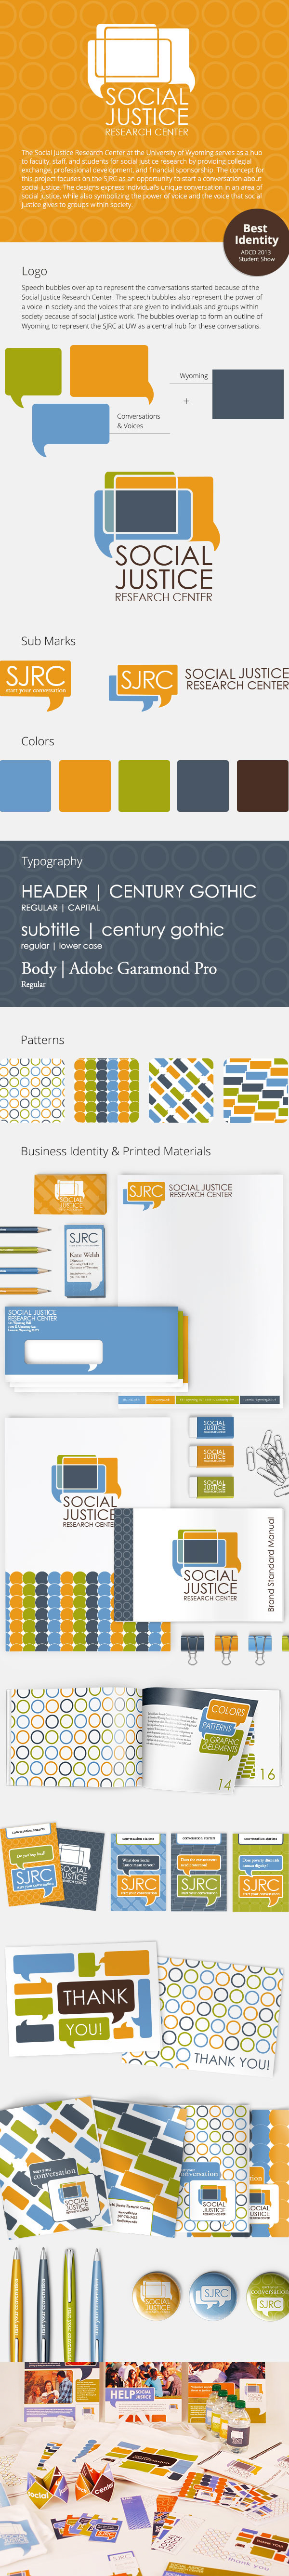 brand business identity Social Justice brand standards manual print